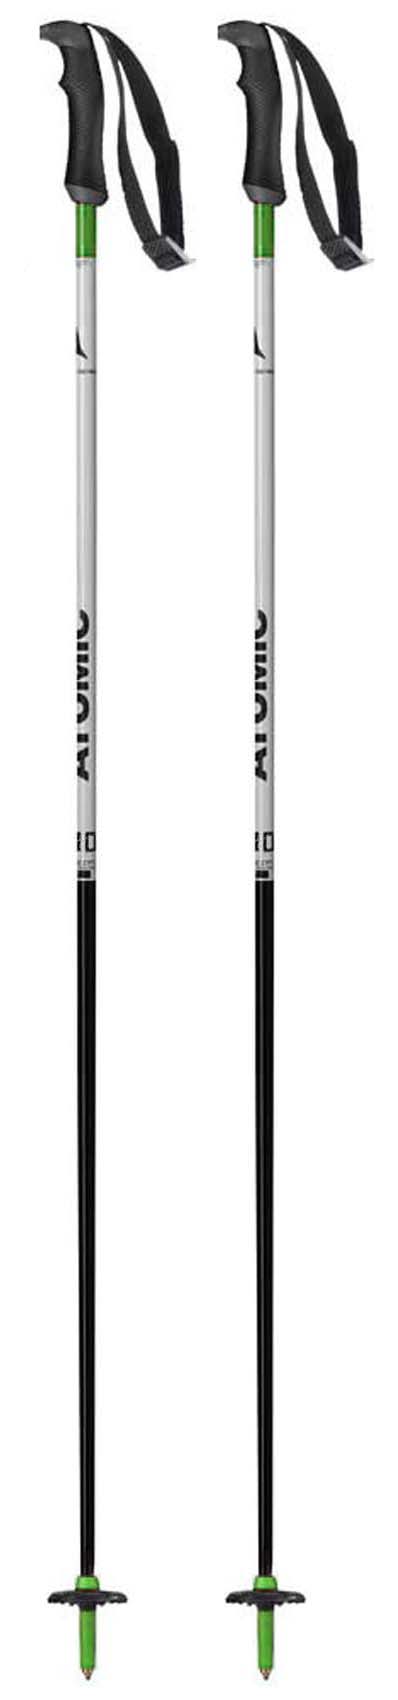 Atomic 2021 Composite Rental Adult Ski Poles NEW !! 110mm